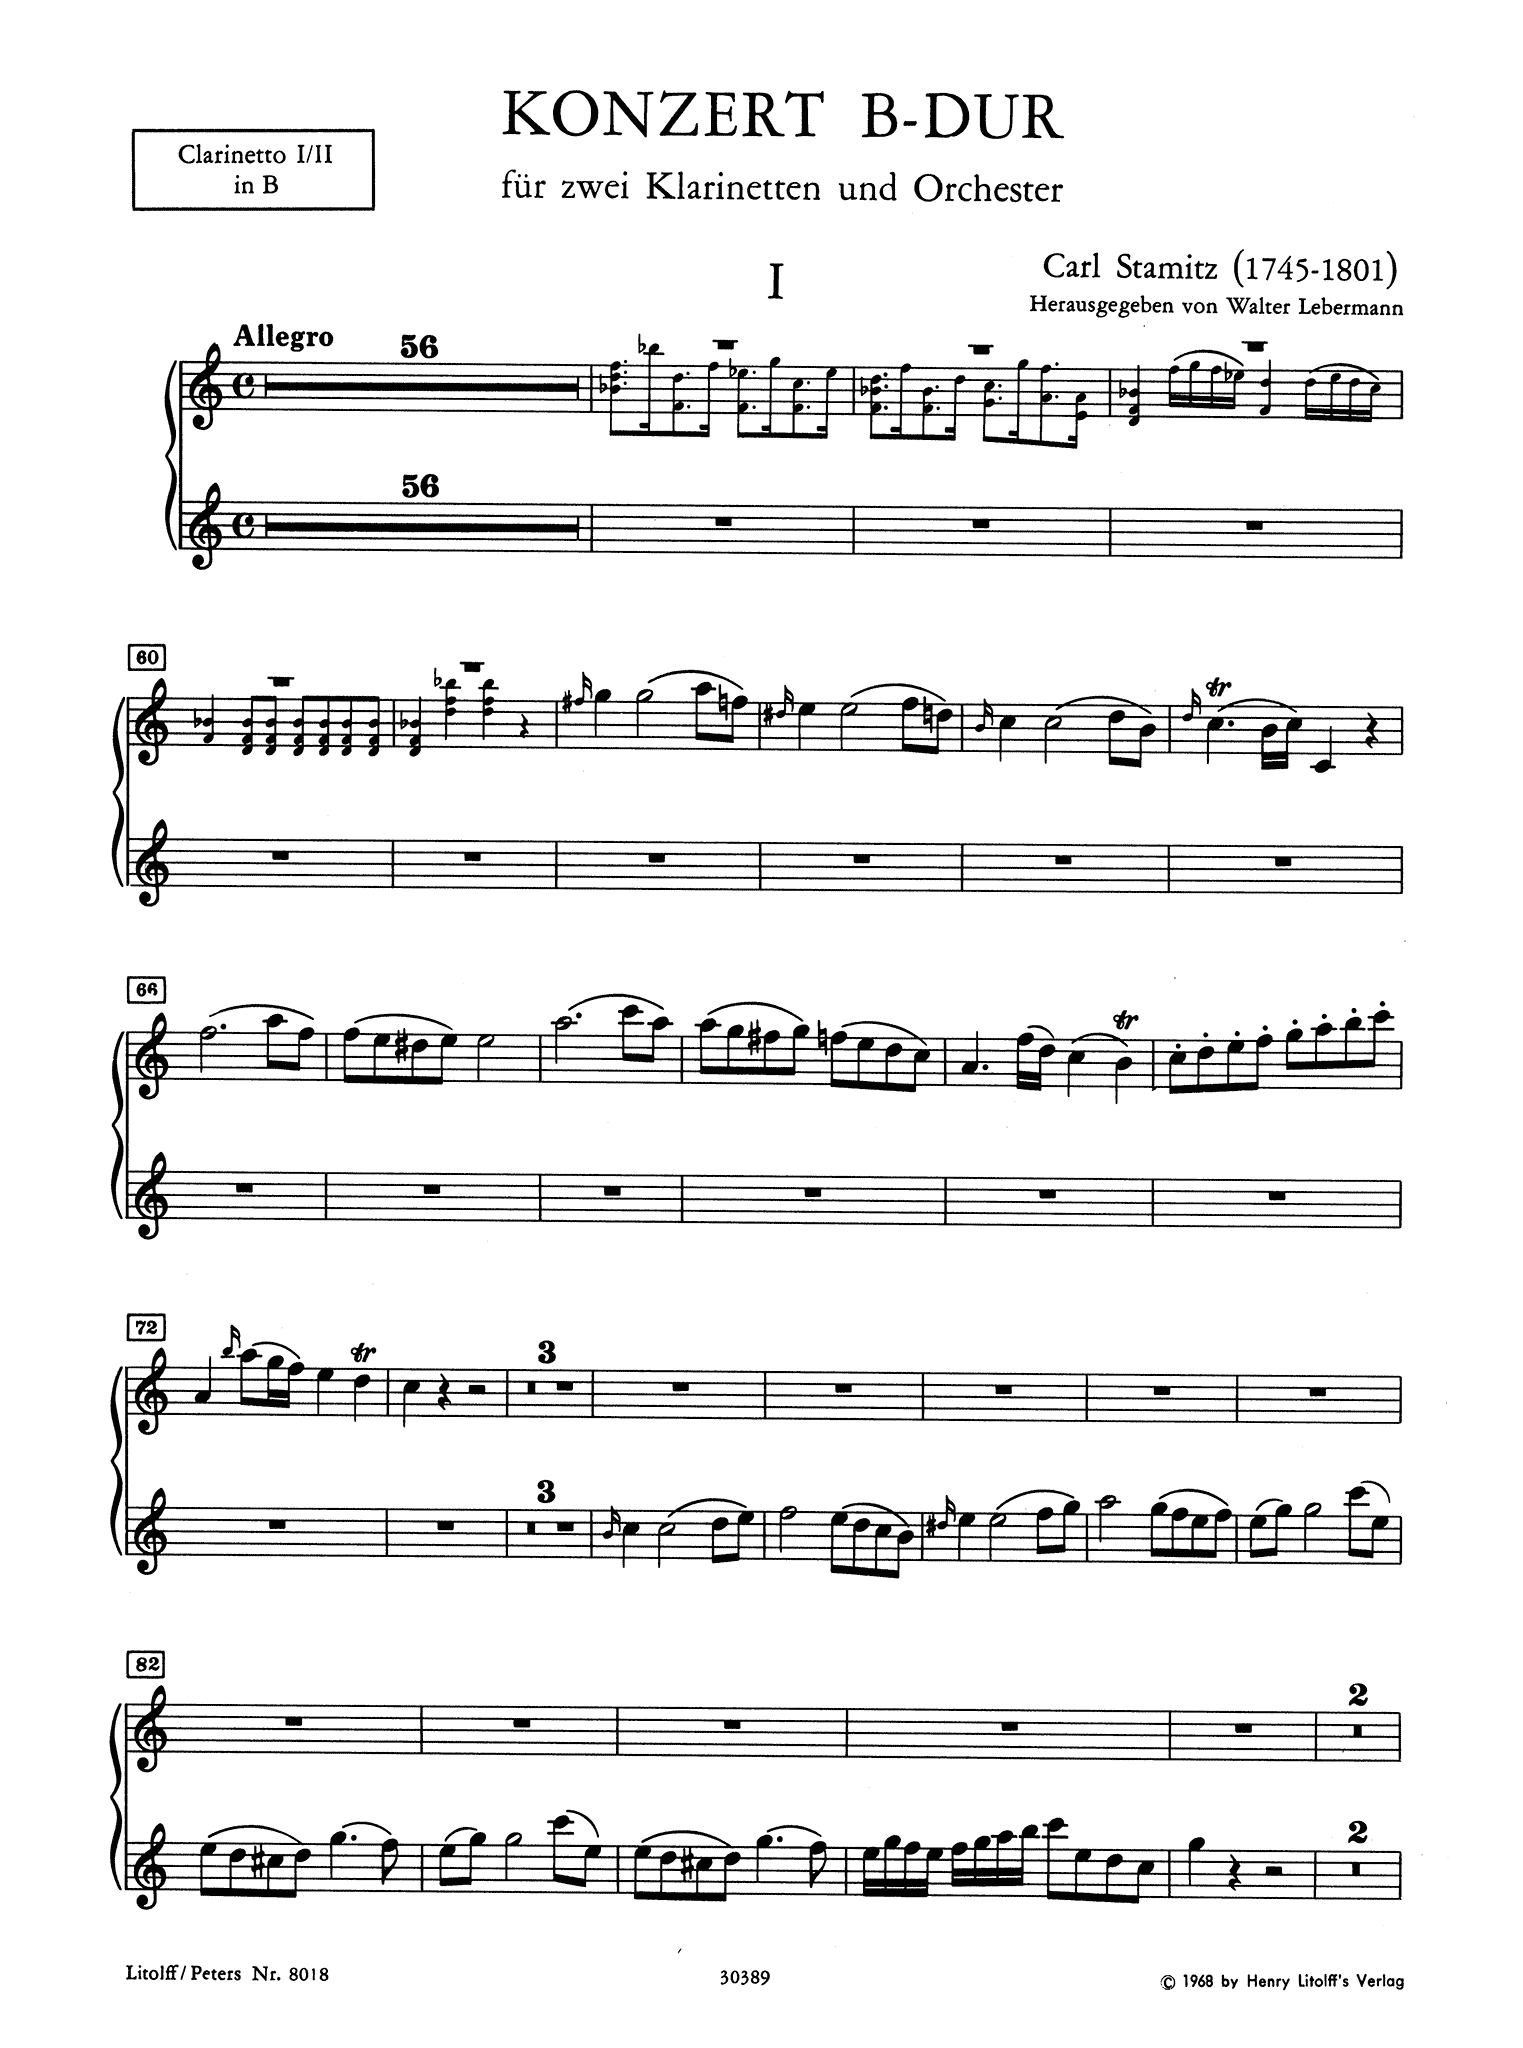 Carl Stamitz Double Concerto B-flat Major Sieber No. 4 clarinet part